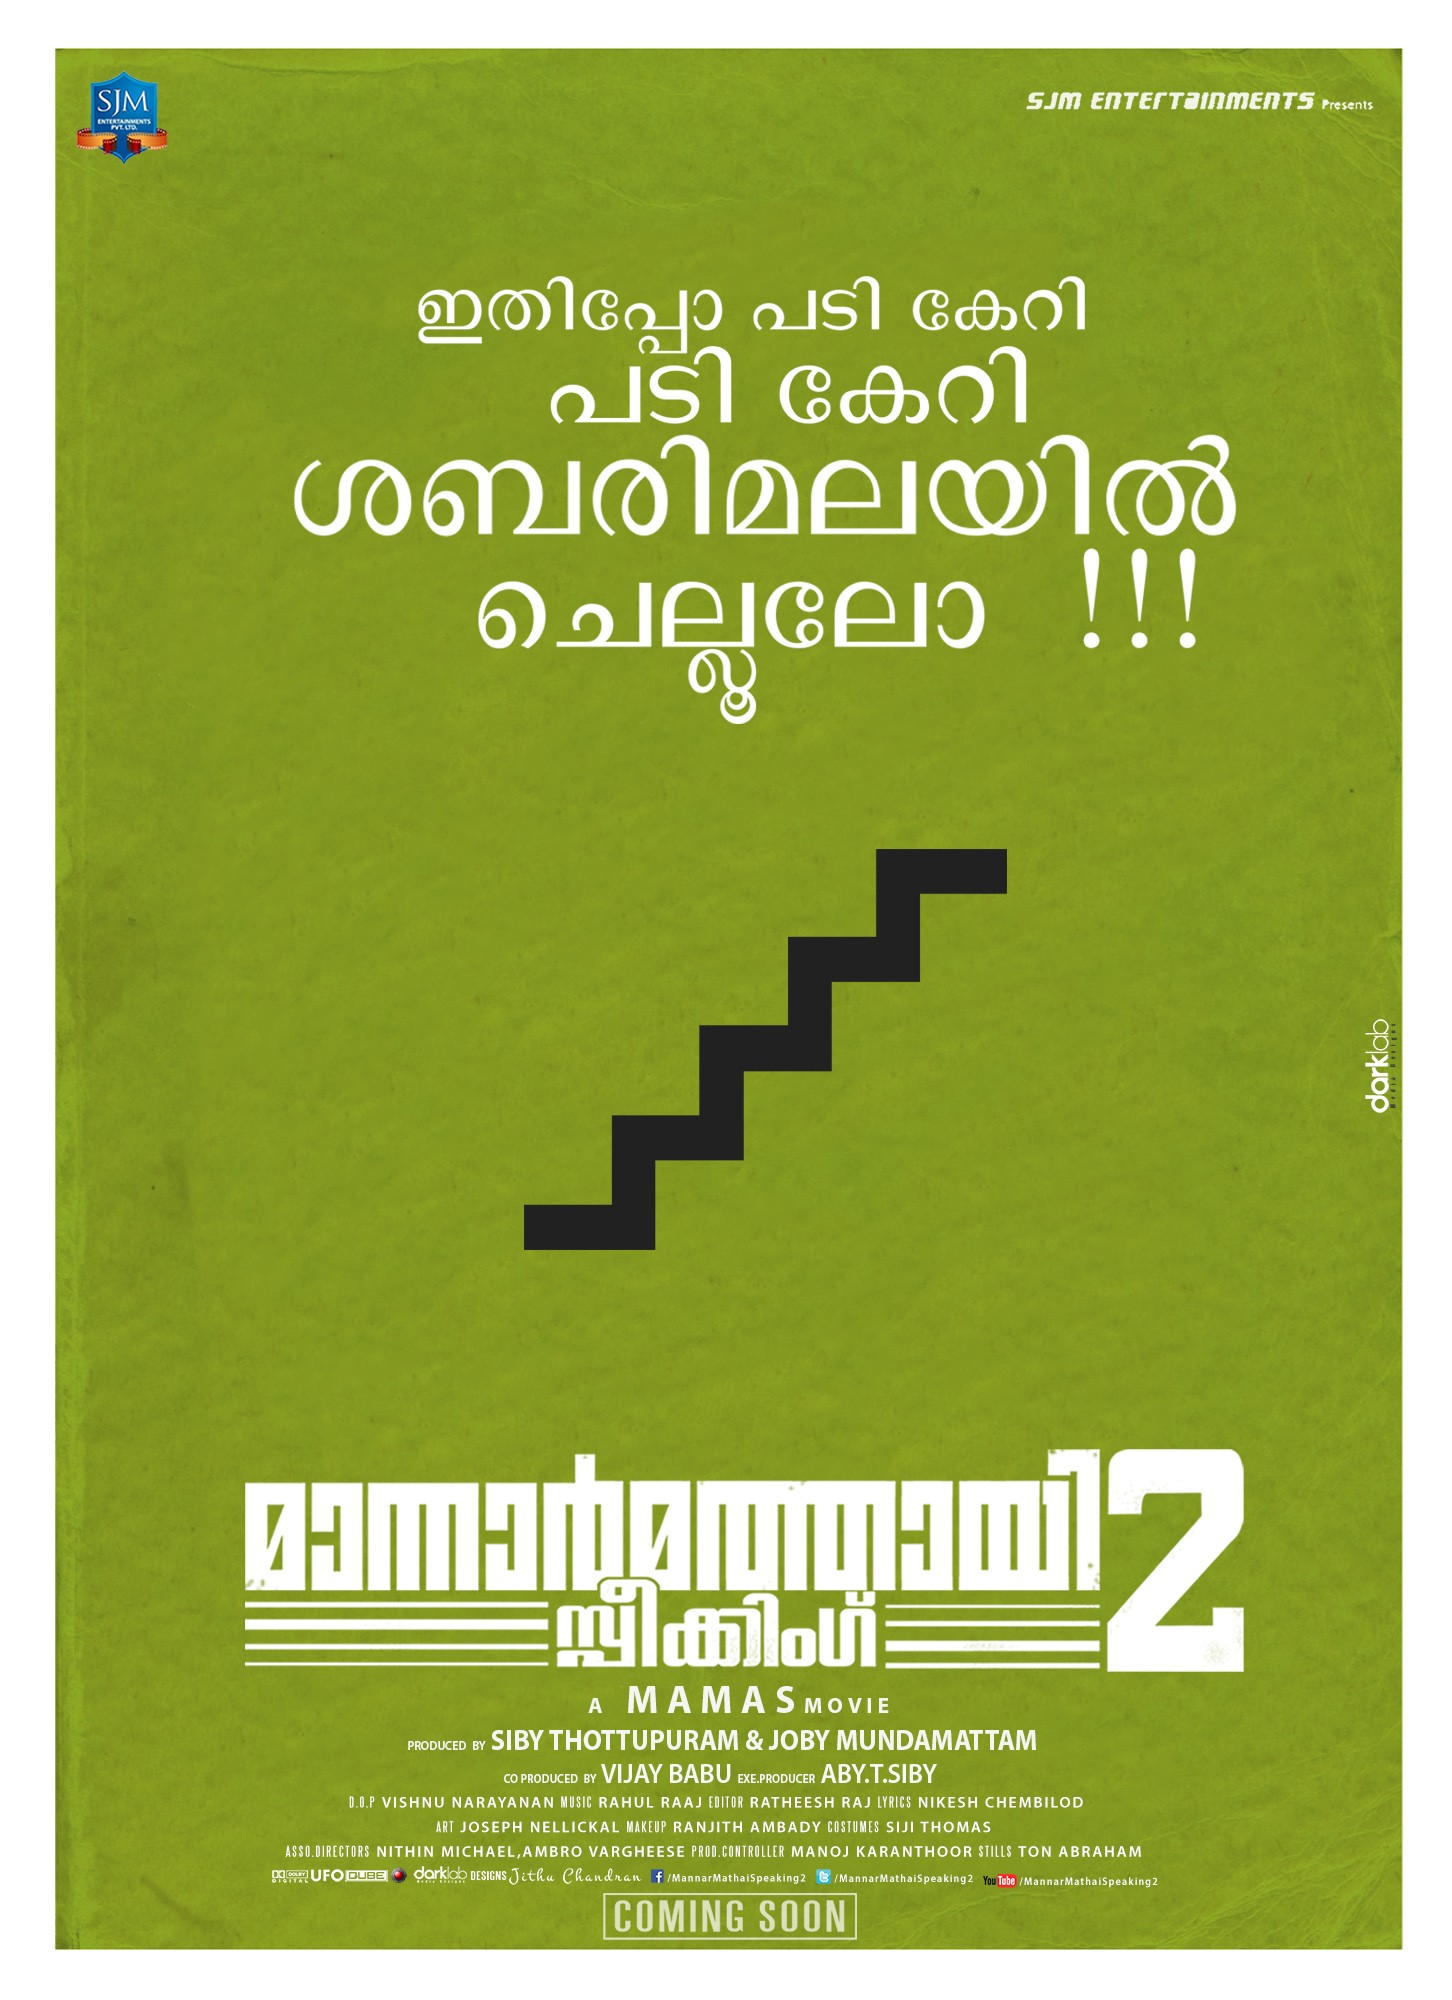 Mega Sized Movie Poster Image for Mannar Mathai Speaking 2 (#8 of 29)